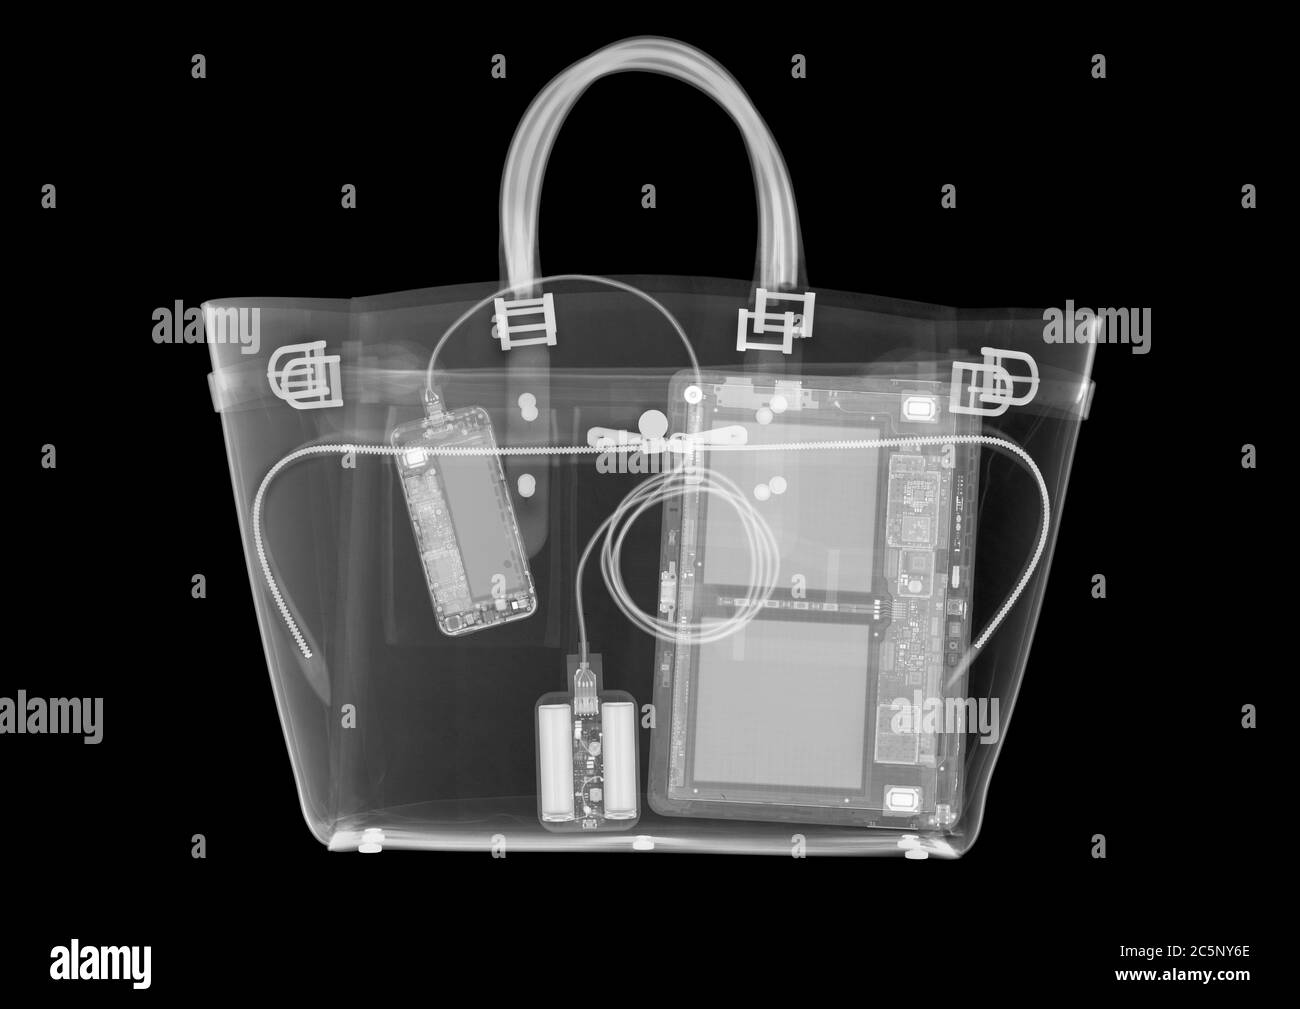 Fashion handbag containing computer devices, X-ray. Stock Photo